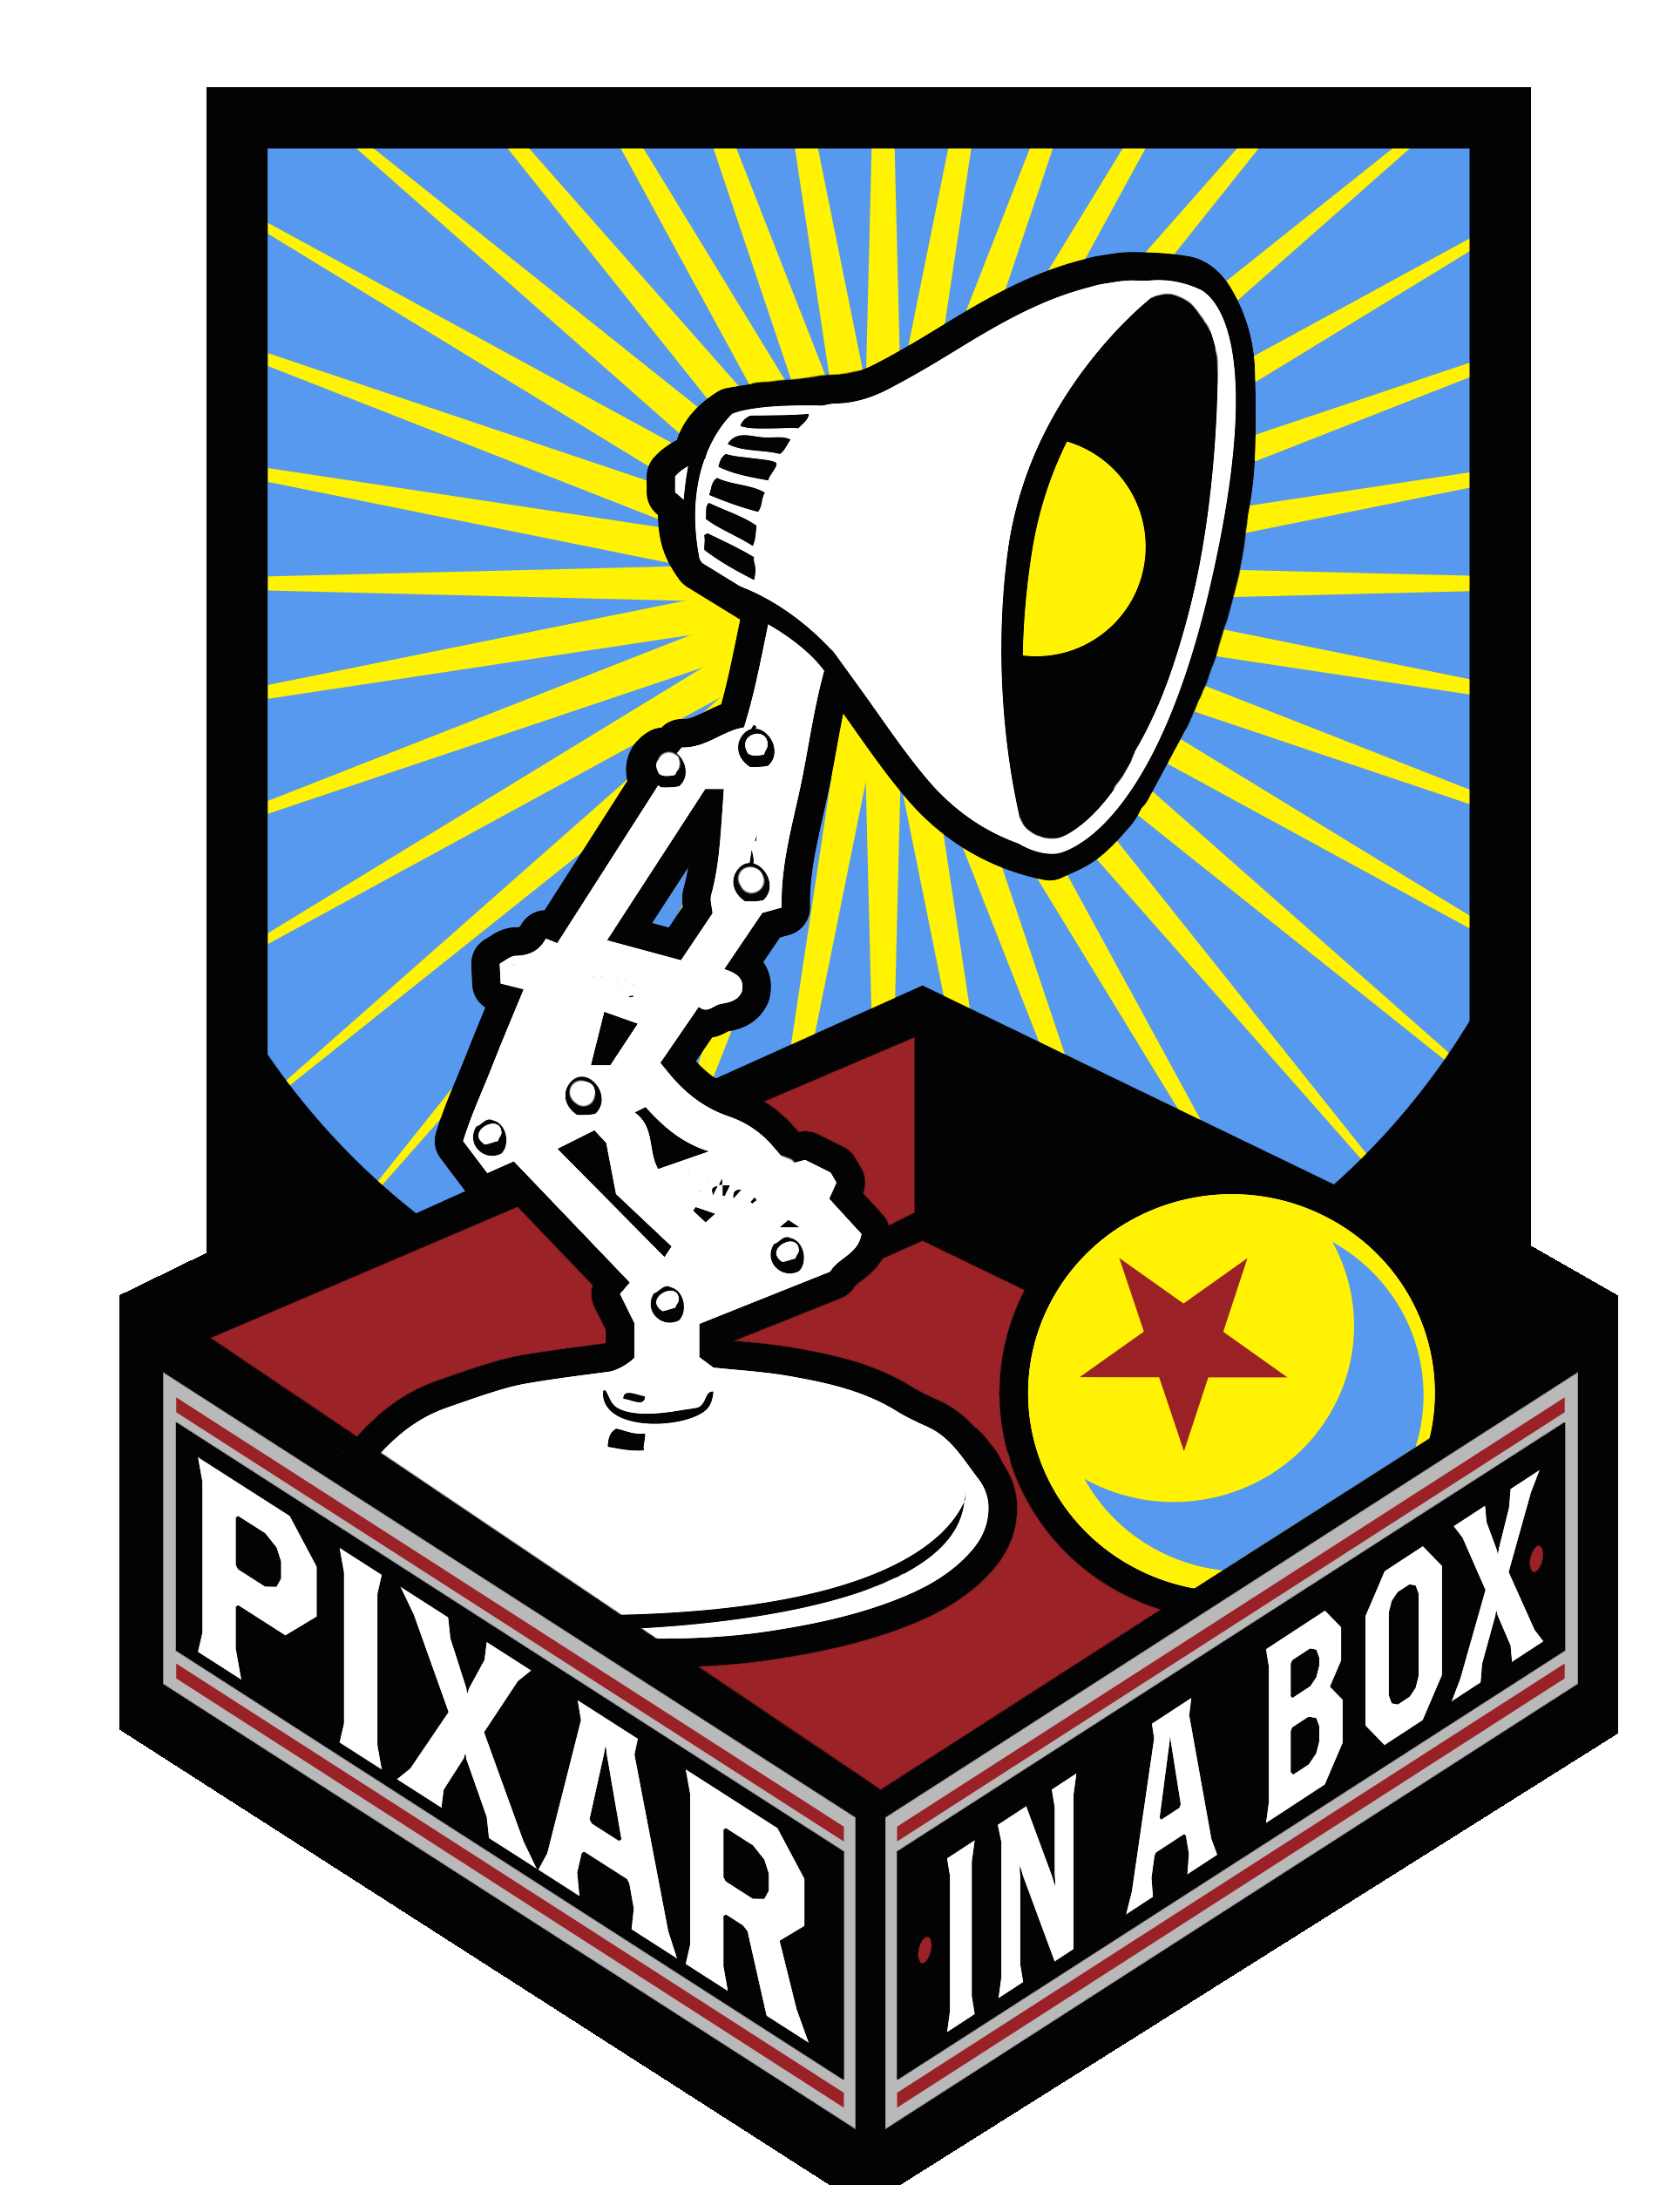 Khan Academy: Pixar in a Box